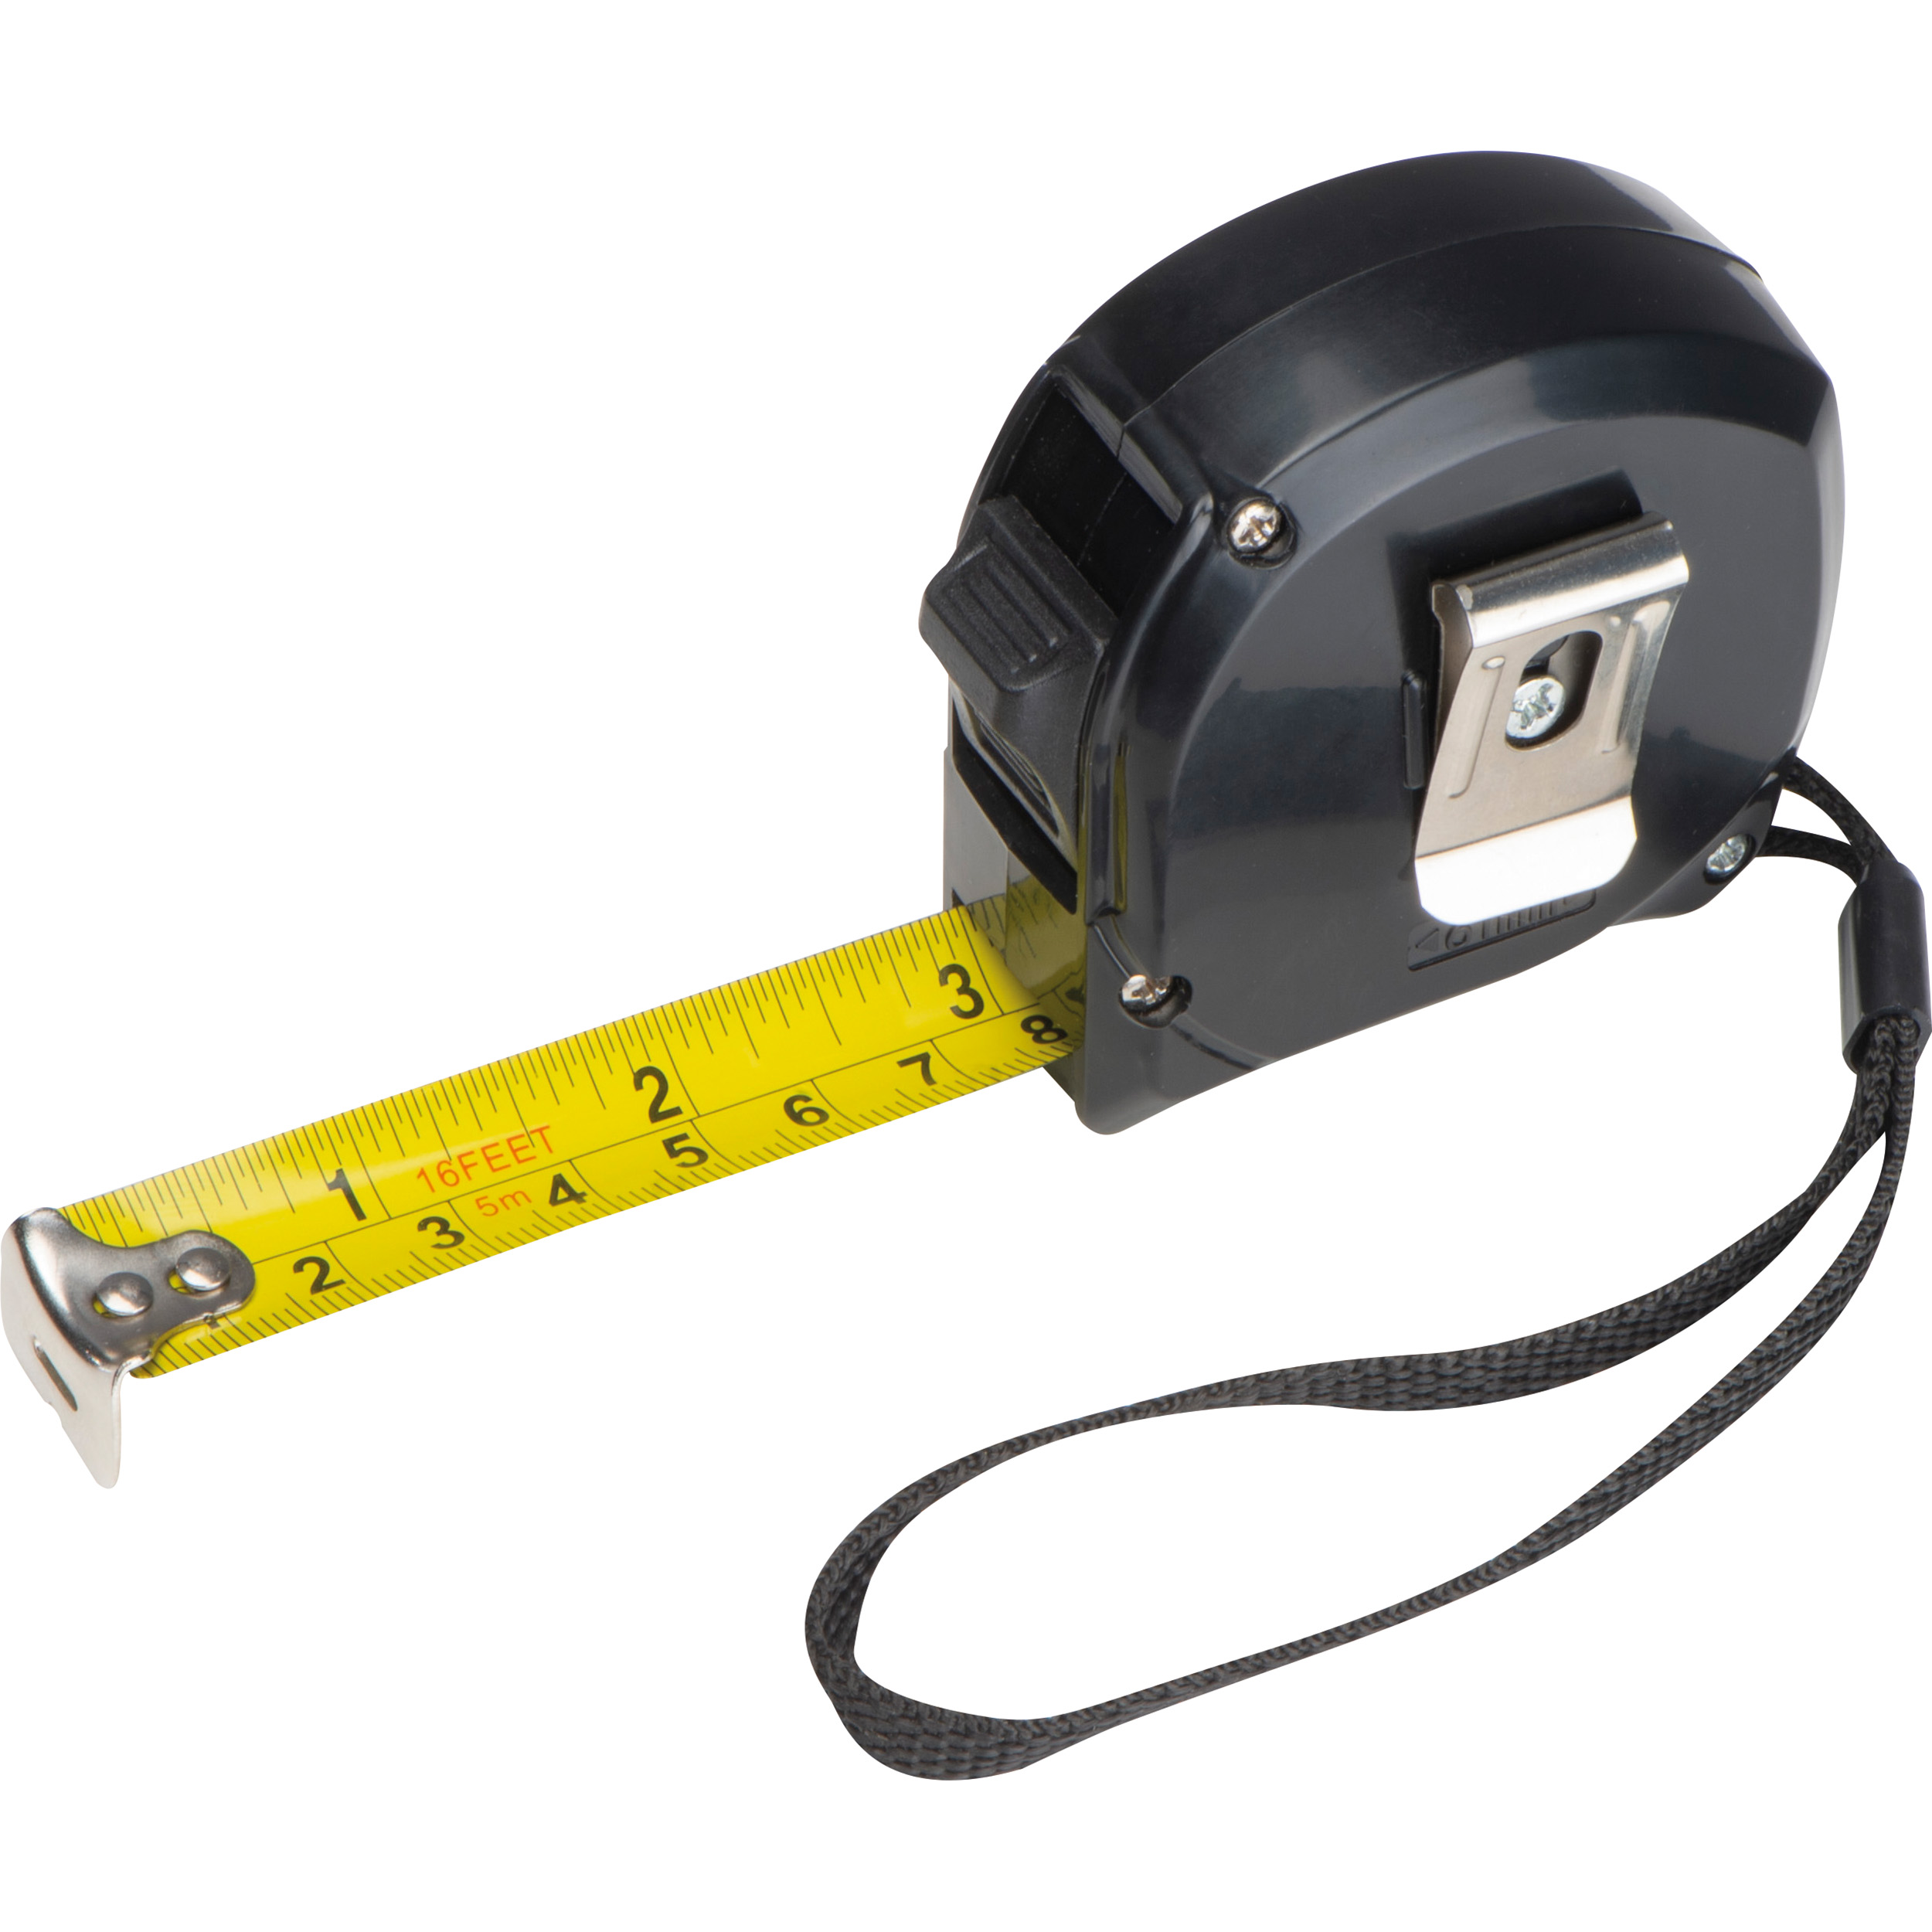 5m steel measuring tape